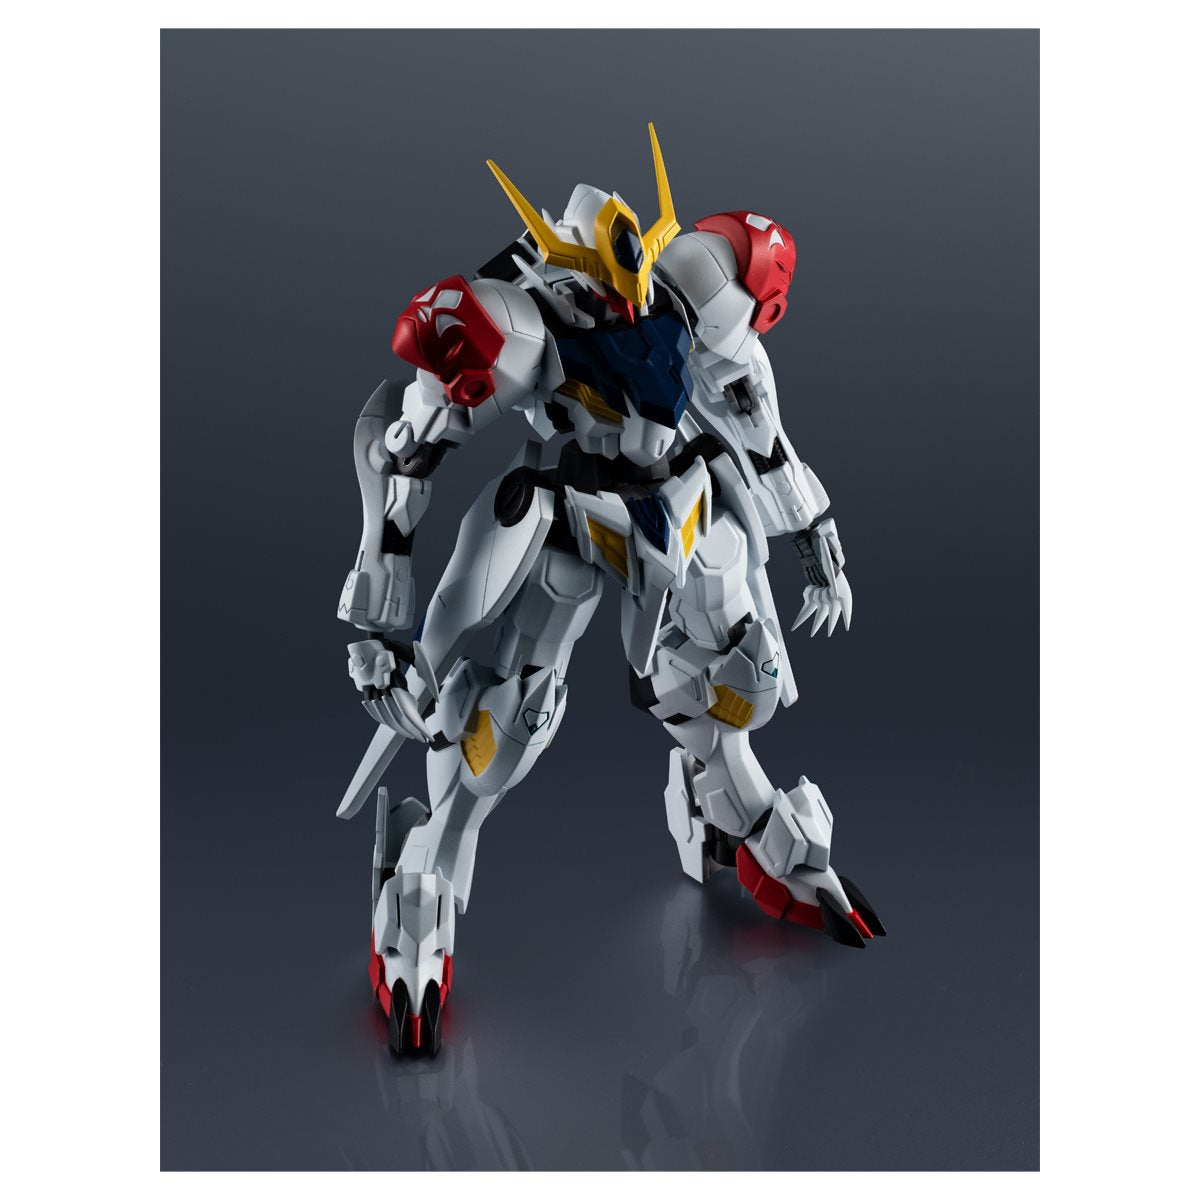 Bandai Tamashii Nations Gundam Universe: Mobile Suit Gundam Iron Blooded Orphans - ASW G 08 Gundam Barbatos Lupus Figura De Accion